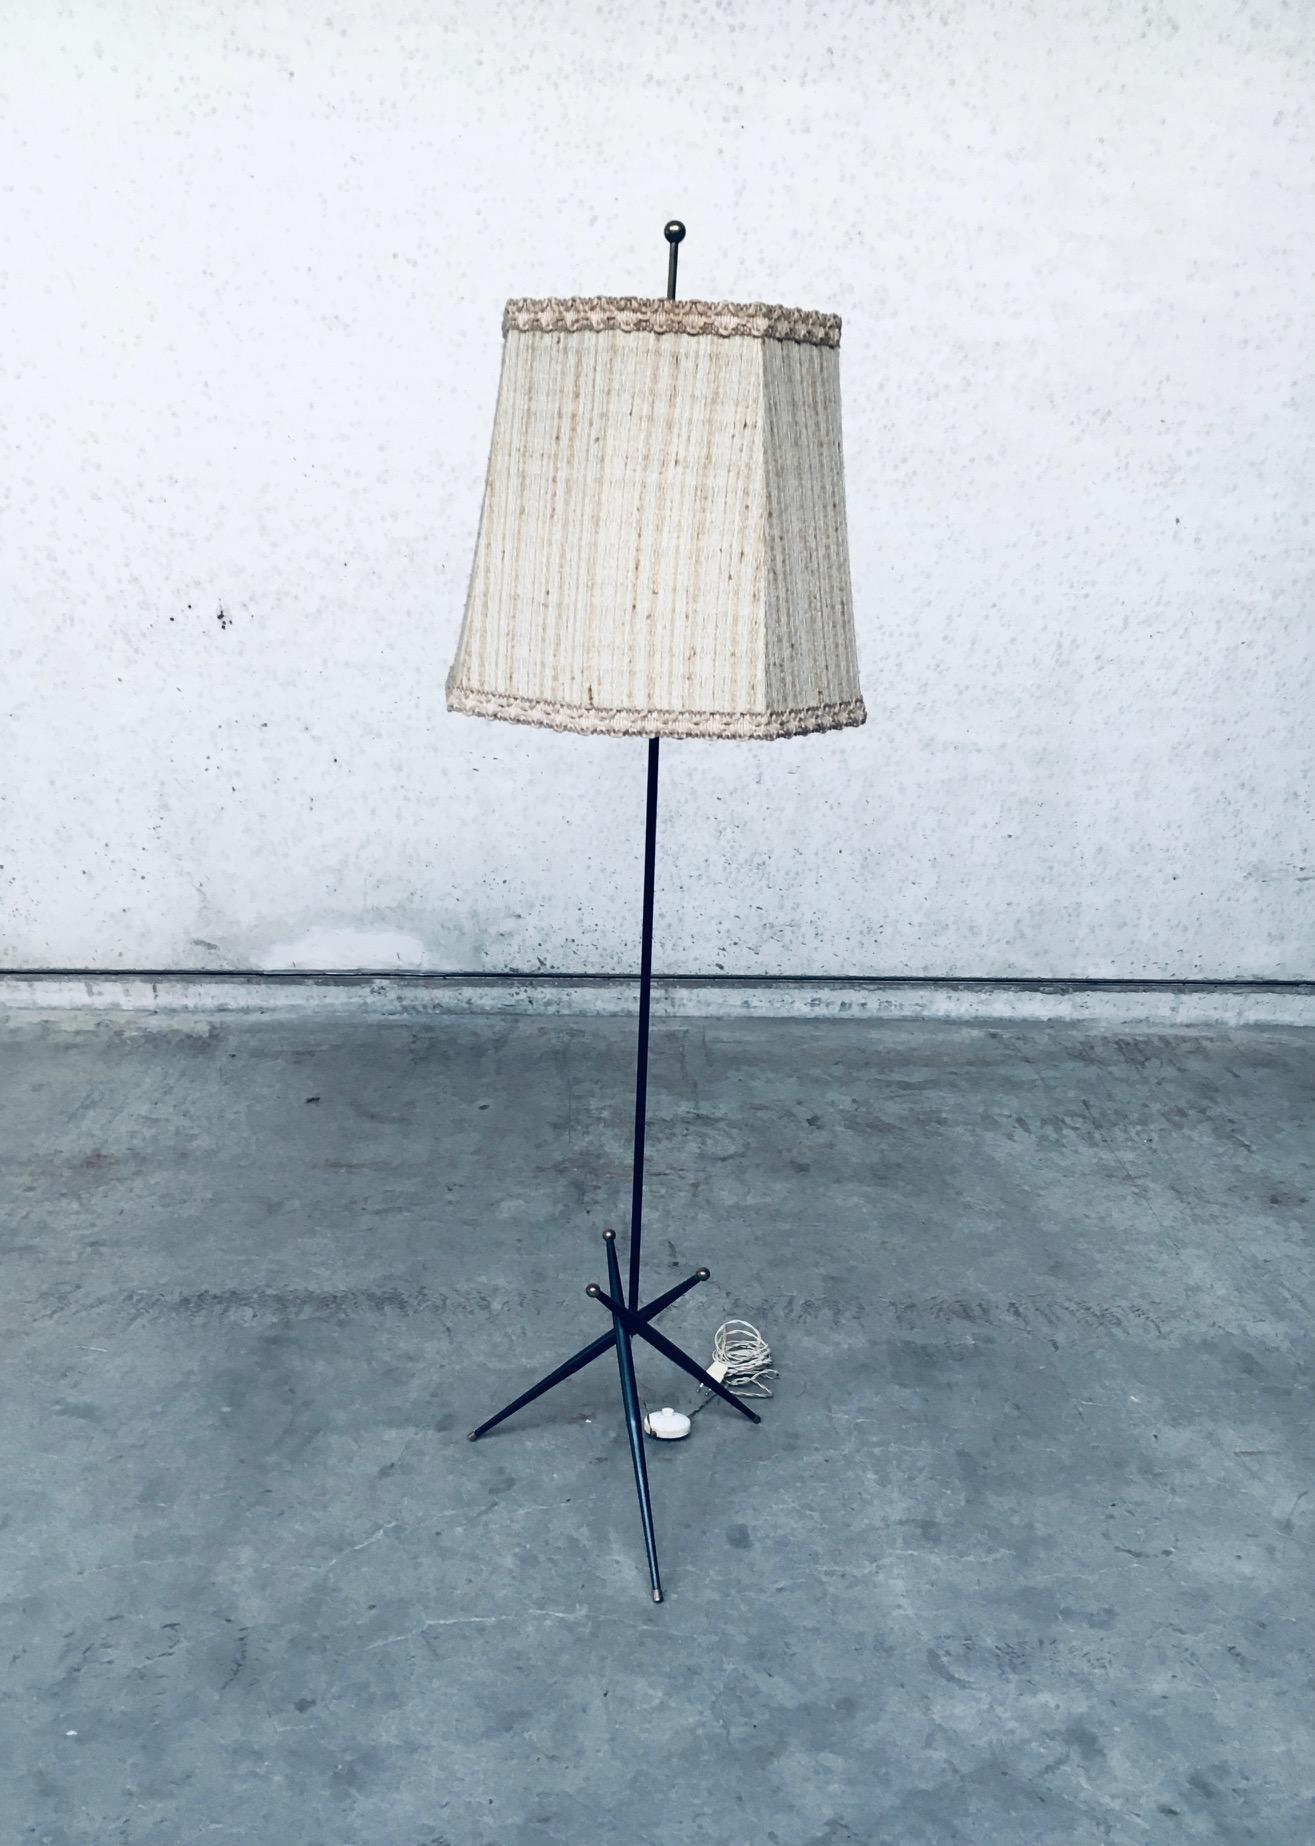 Metal Atomic Age Design Floor Lamp, Belgium 1950's For Sale